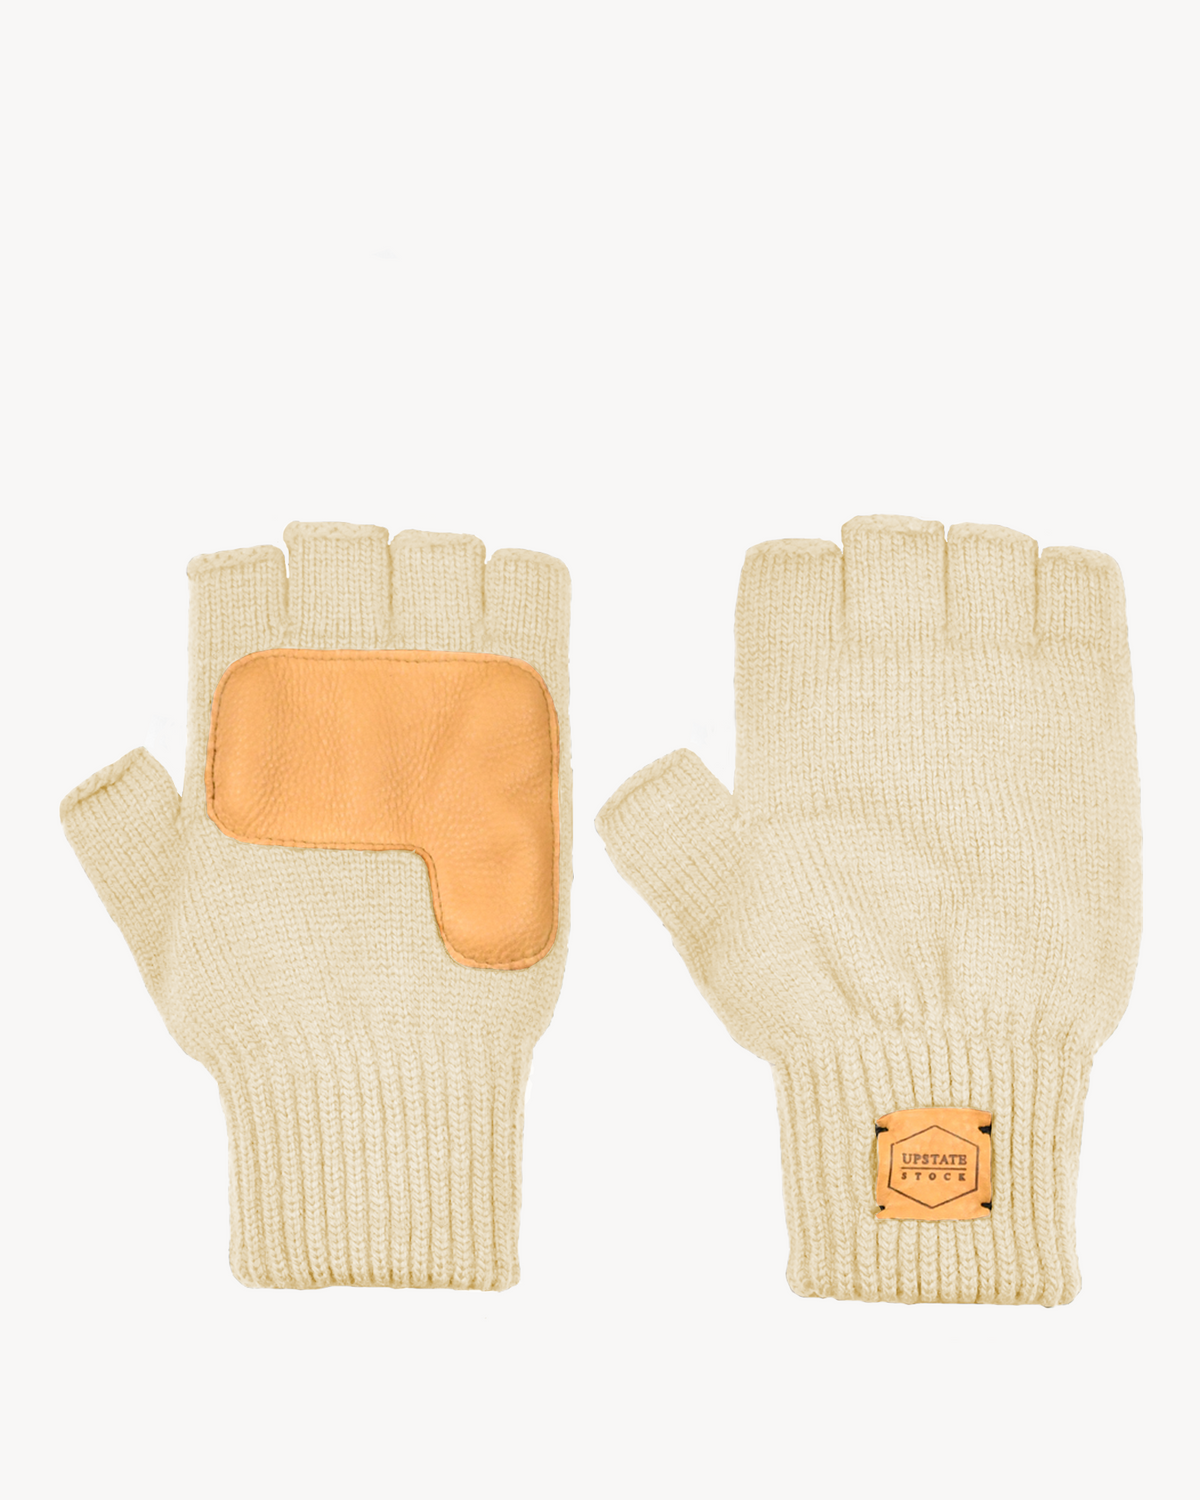 Undyed Merino Wool Fingerless Glove with Natural Deerskin Palm